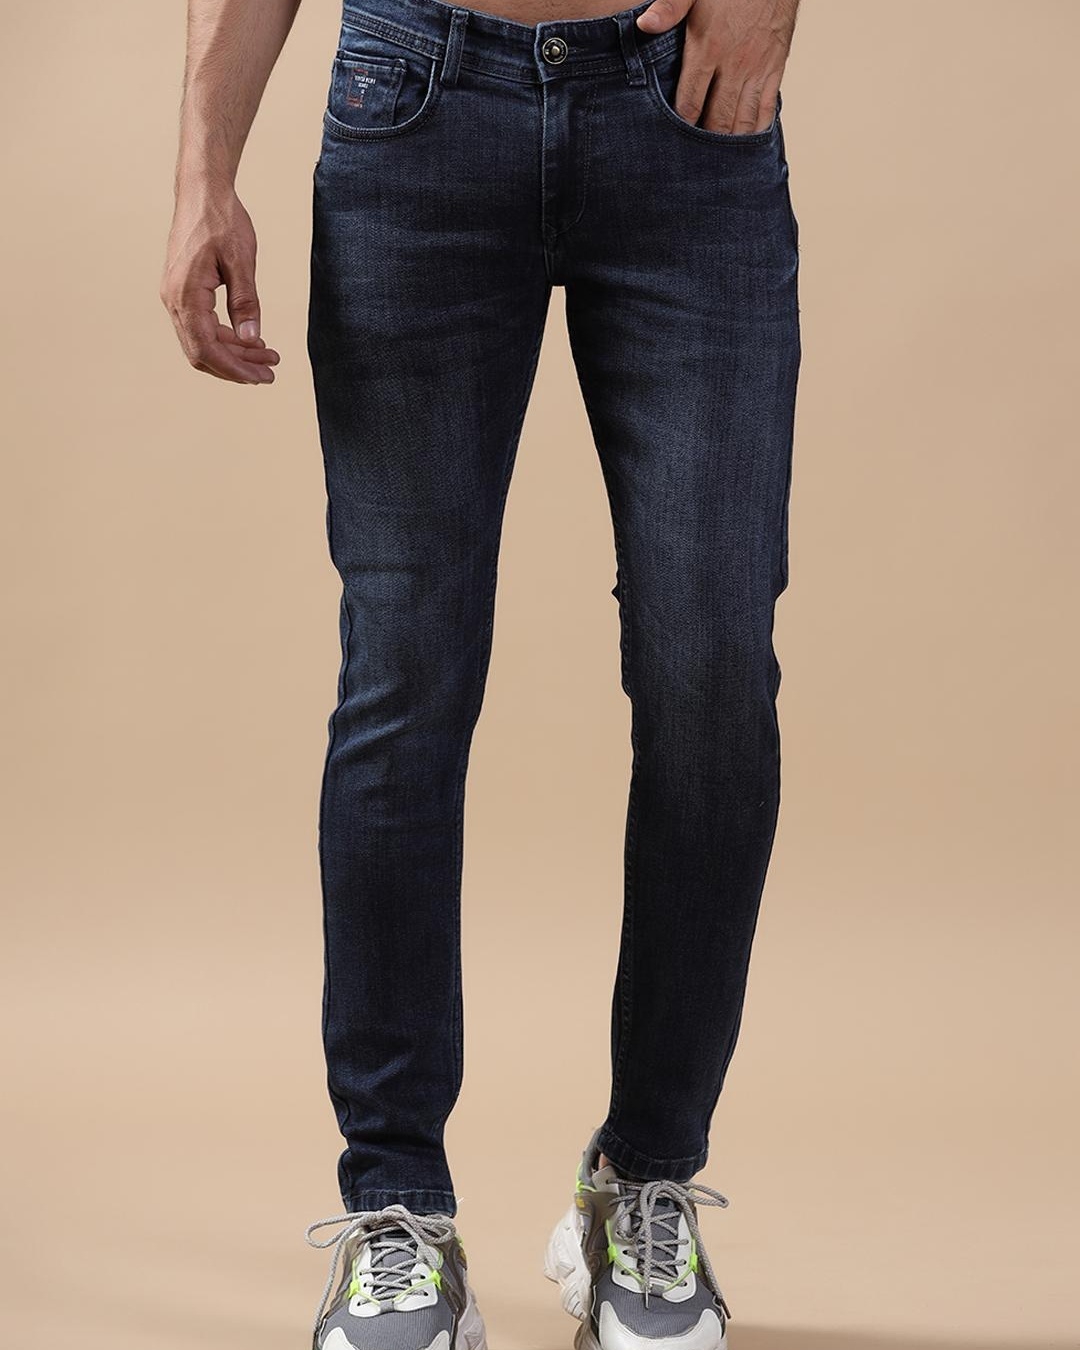 Buy Men's Blue Washed Jeans Online at Bewakoof